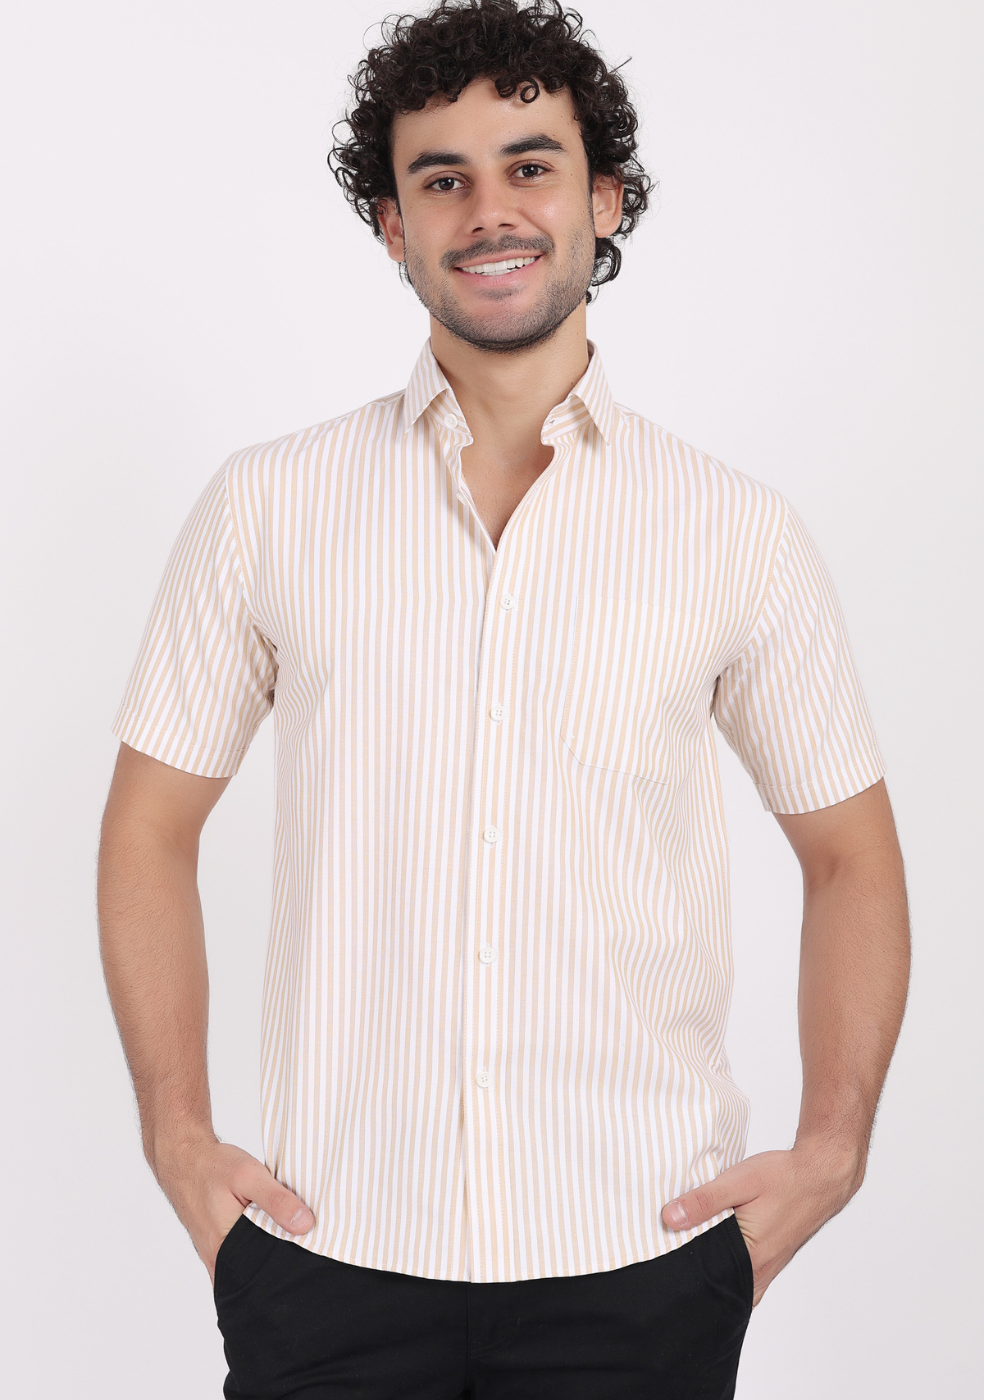 Half Sleeve Lining Shirts For Men